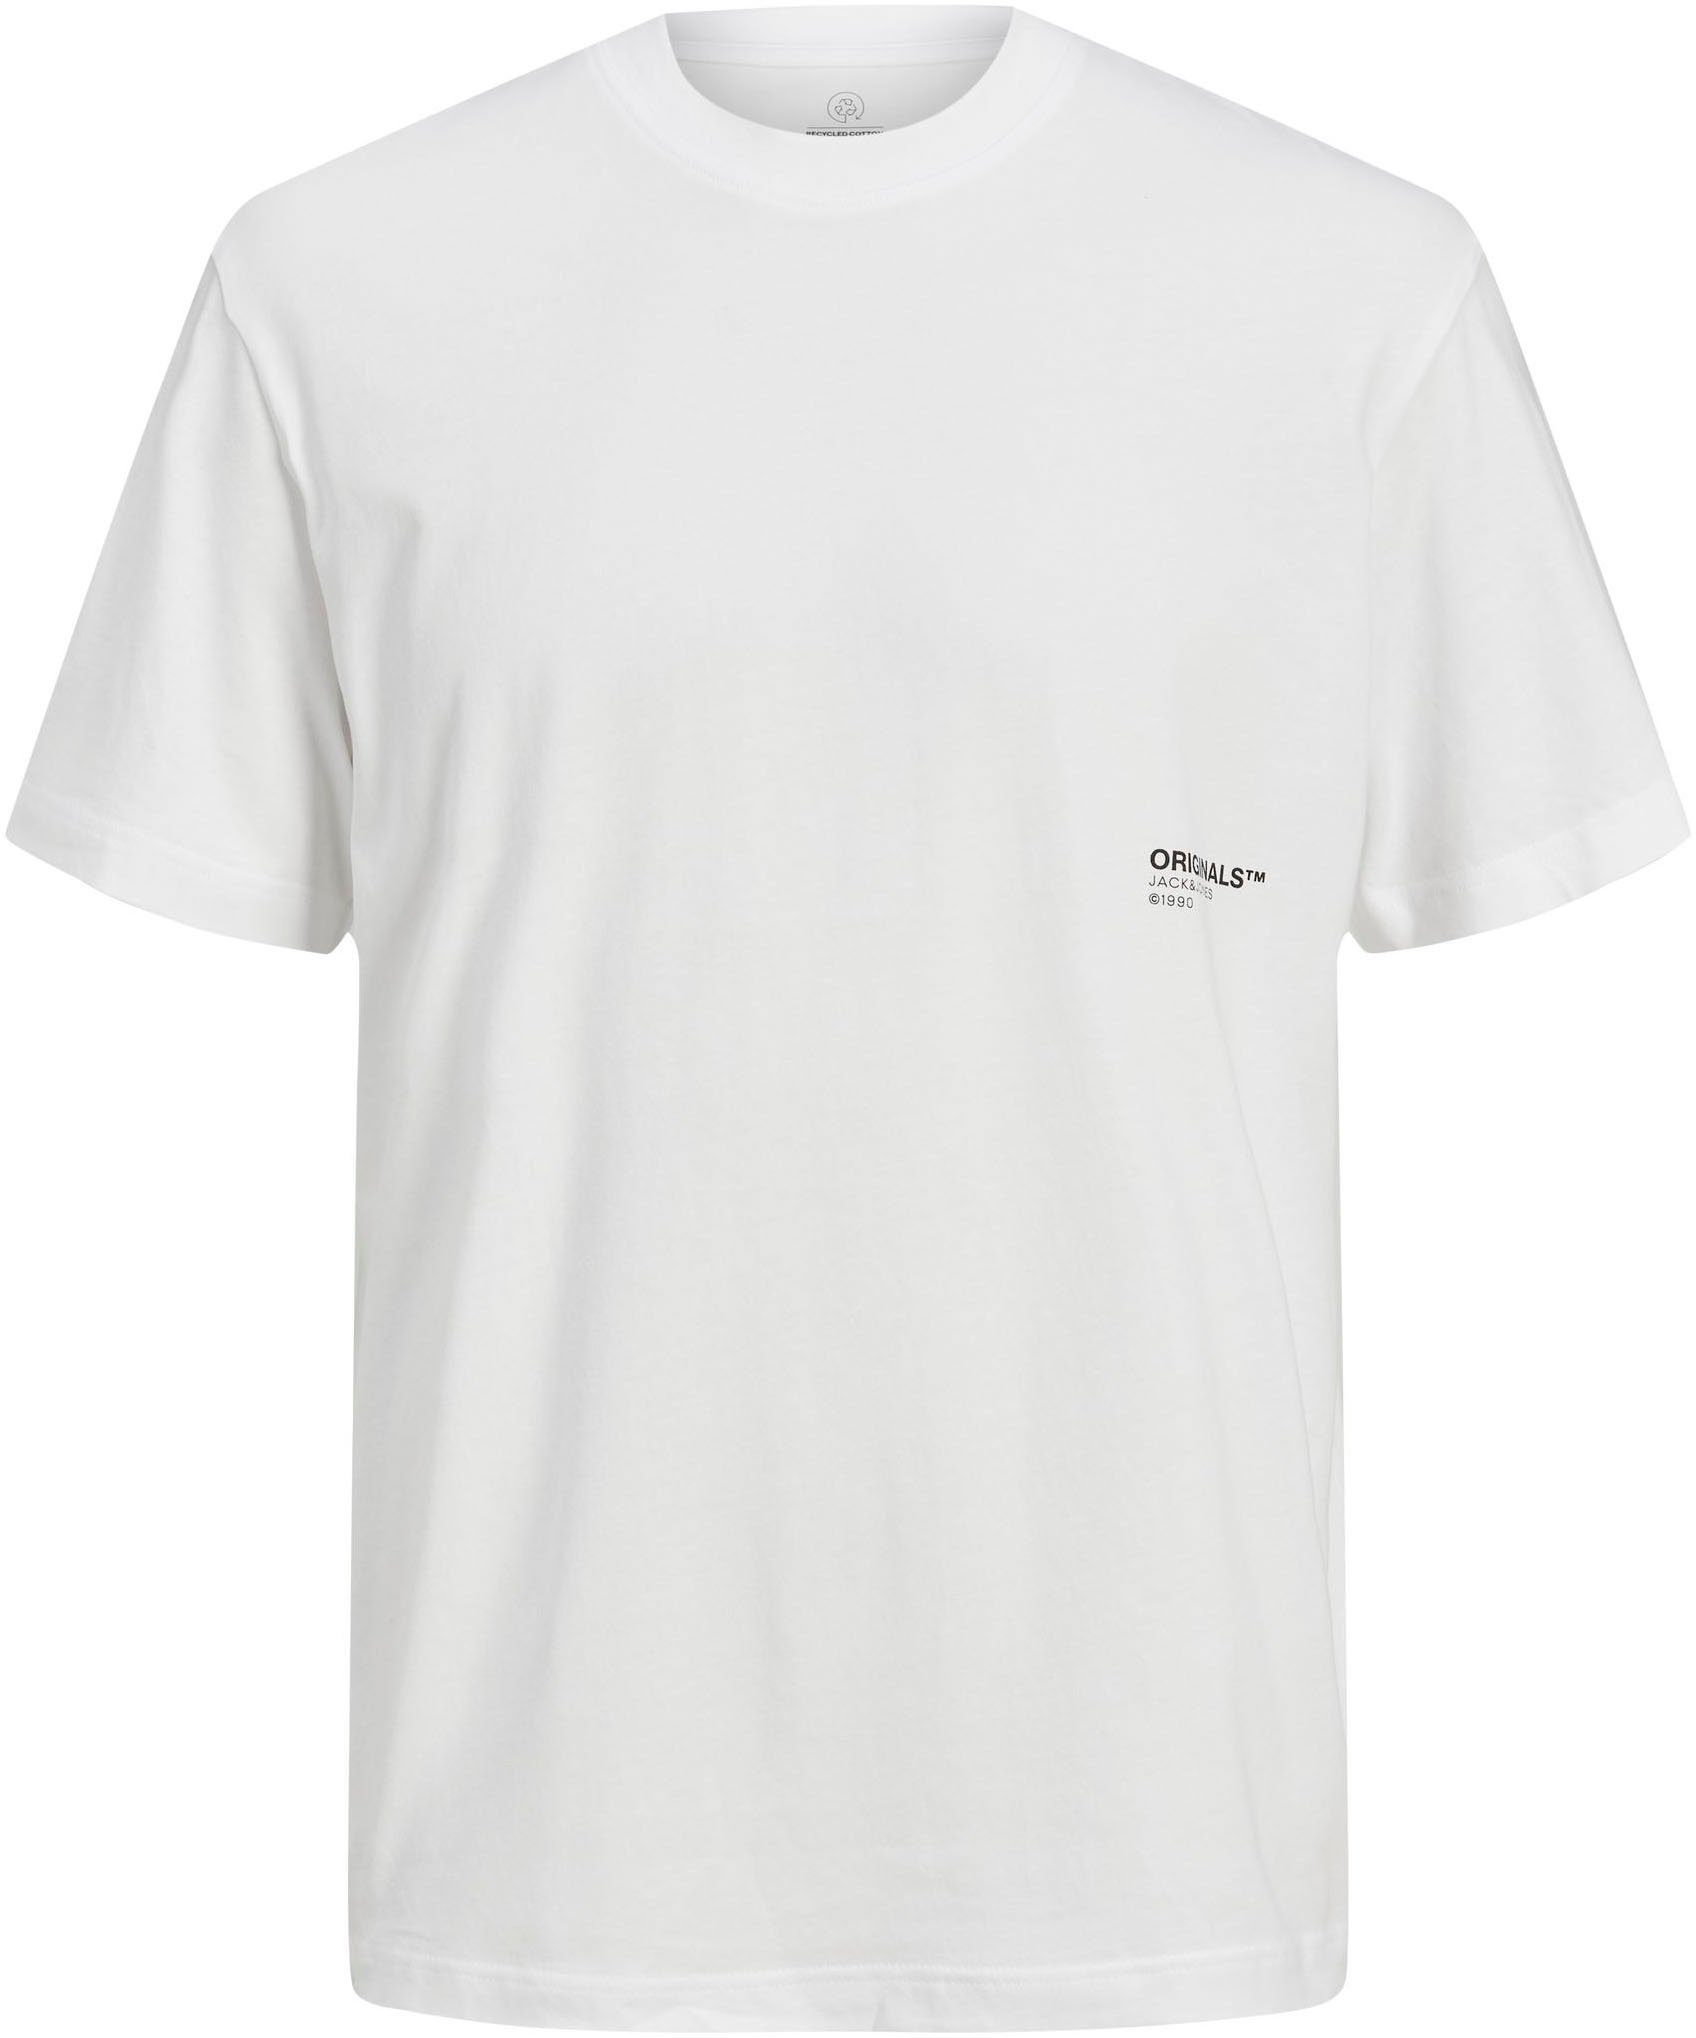 Jack NECK CREW Jones White JORCLEAN TEE T-Shirt & Bright